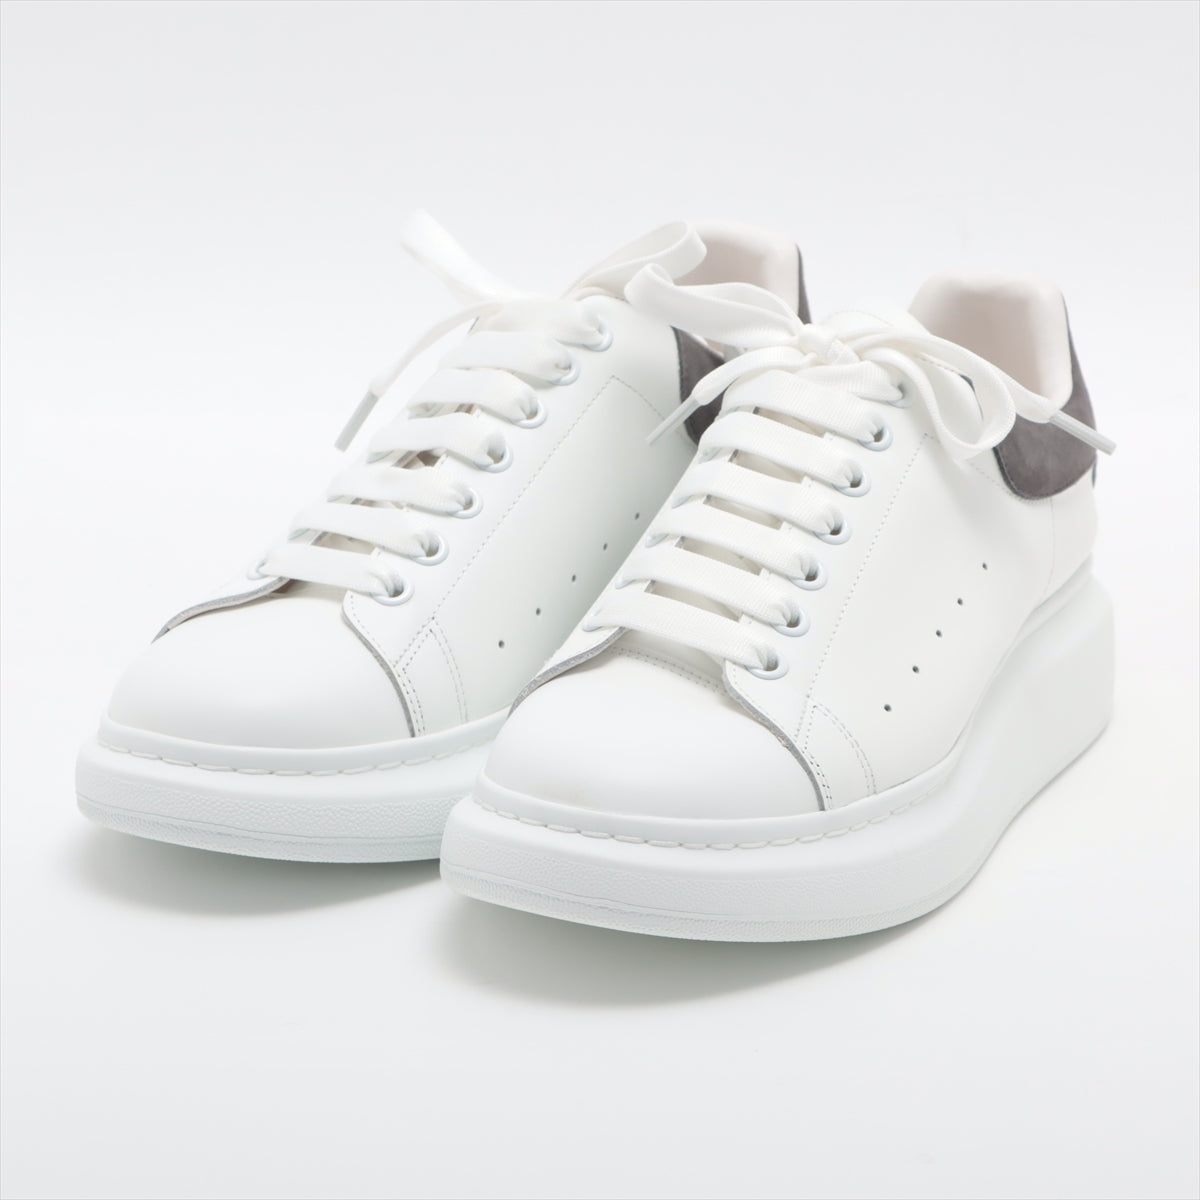 Alexander McQueen Leather Sneakers 42D Men's Gray x white 553680